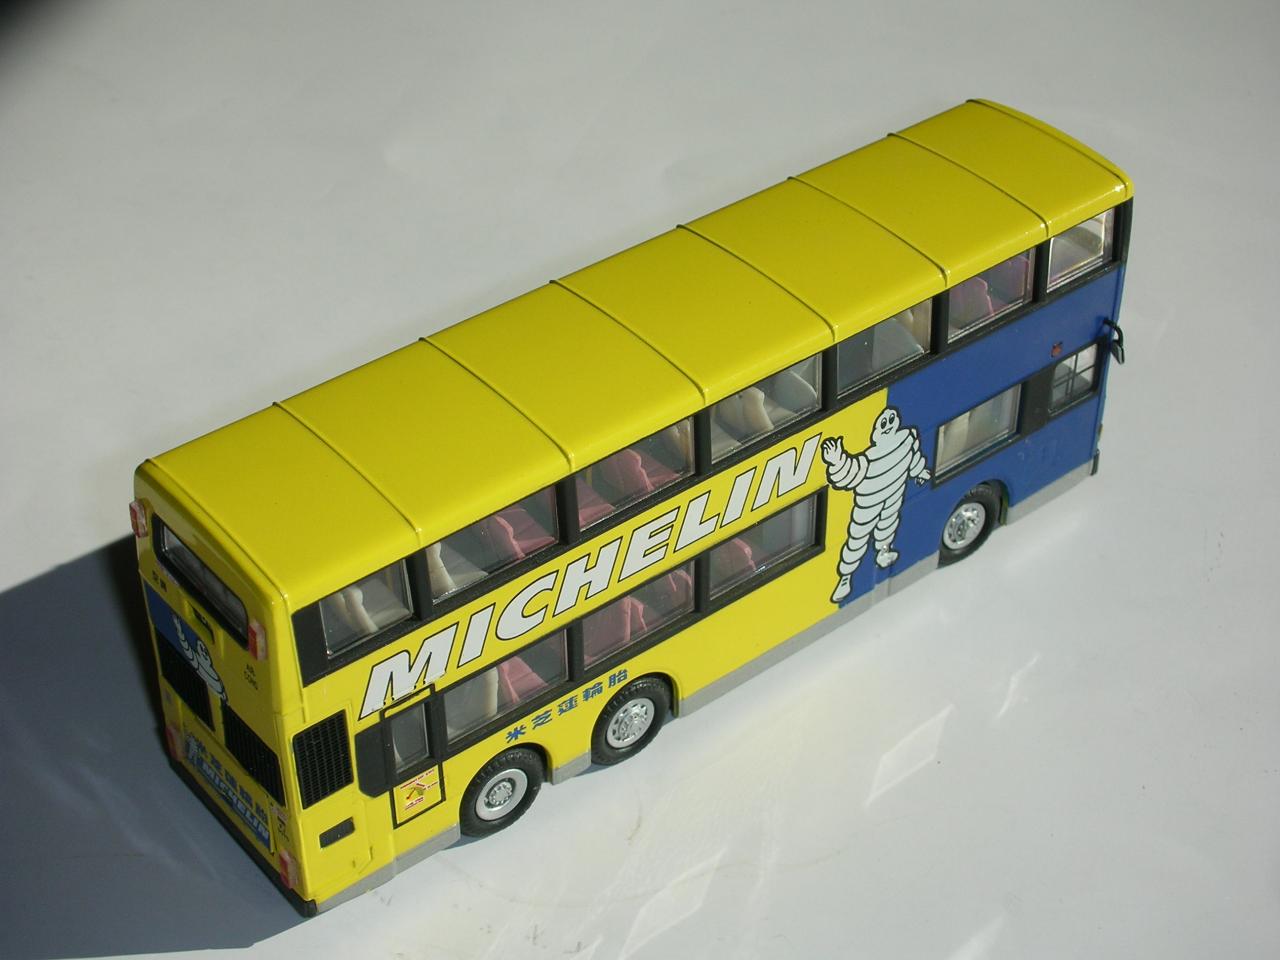 dennis-dragon-bus-11-metres-collectors-models-76eme.jpg